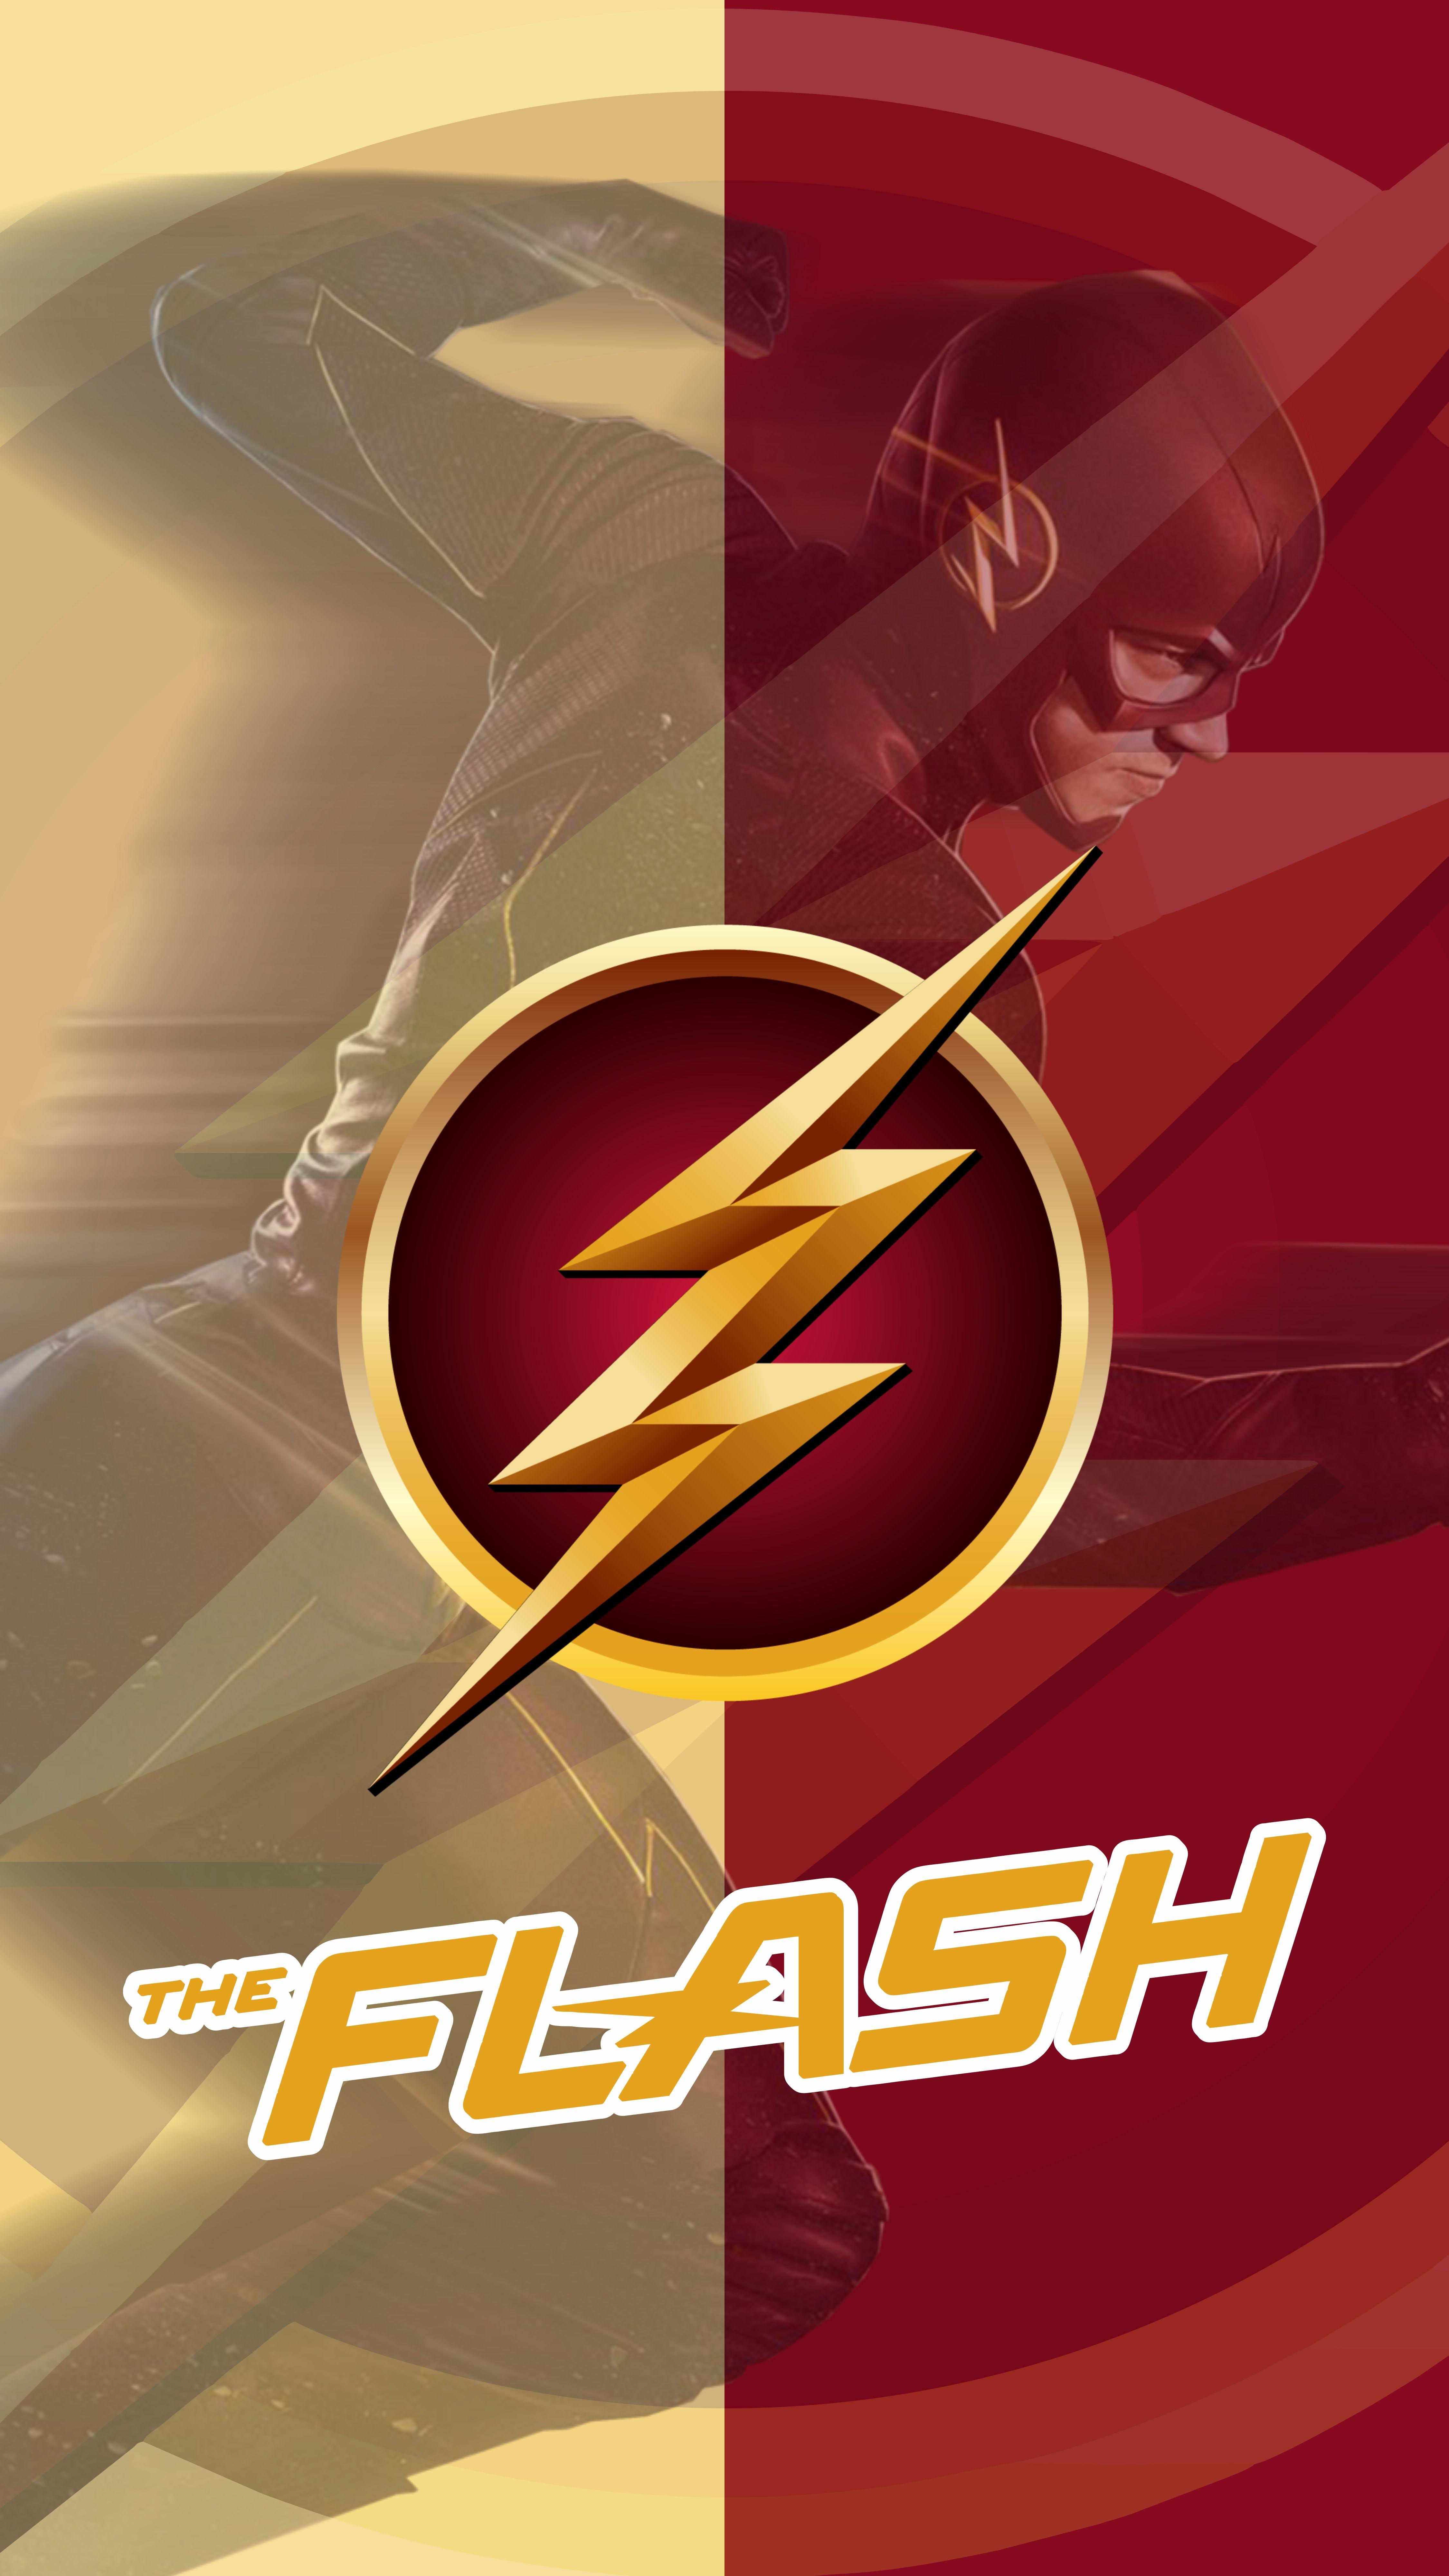 TheFlash 'The Flash' Allen. The Flash